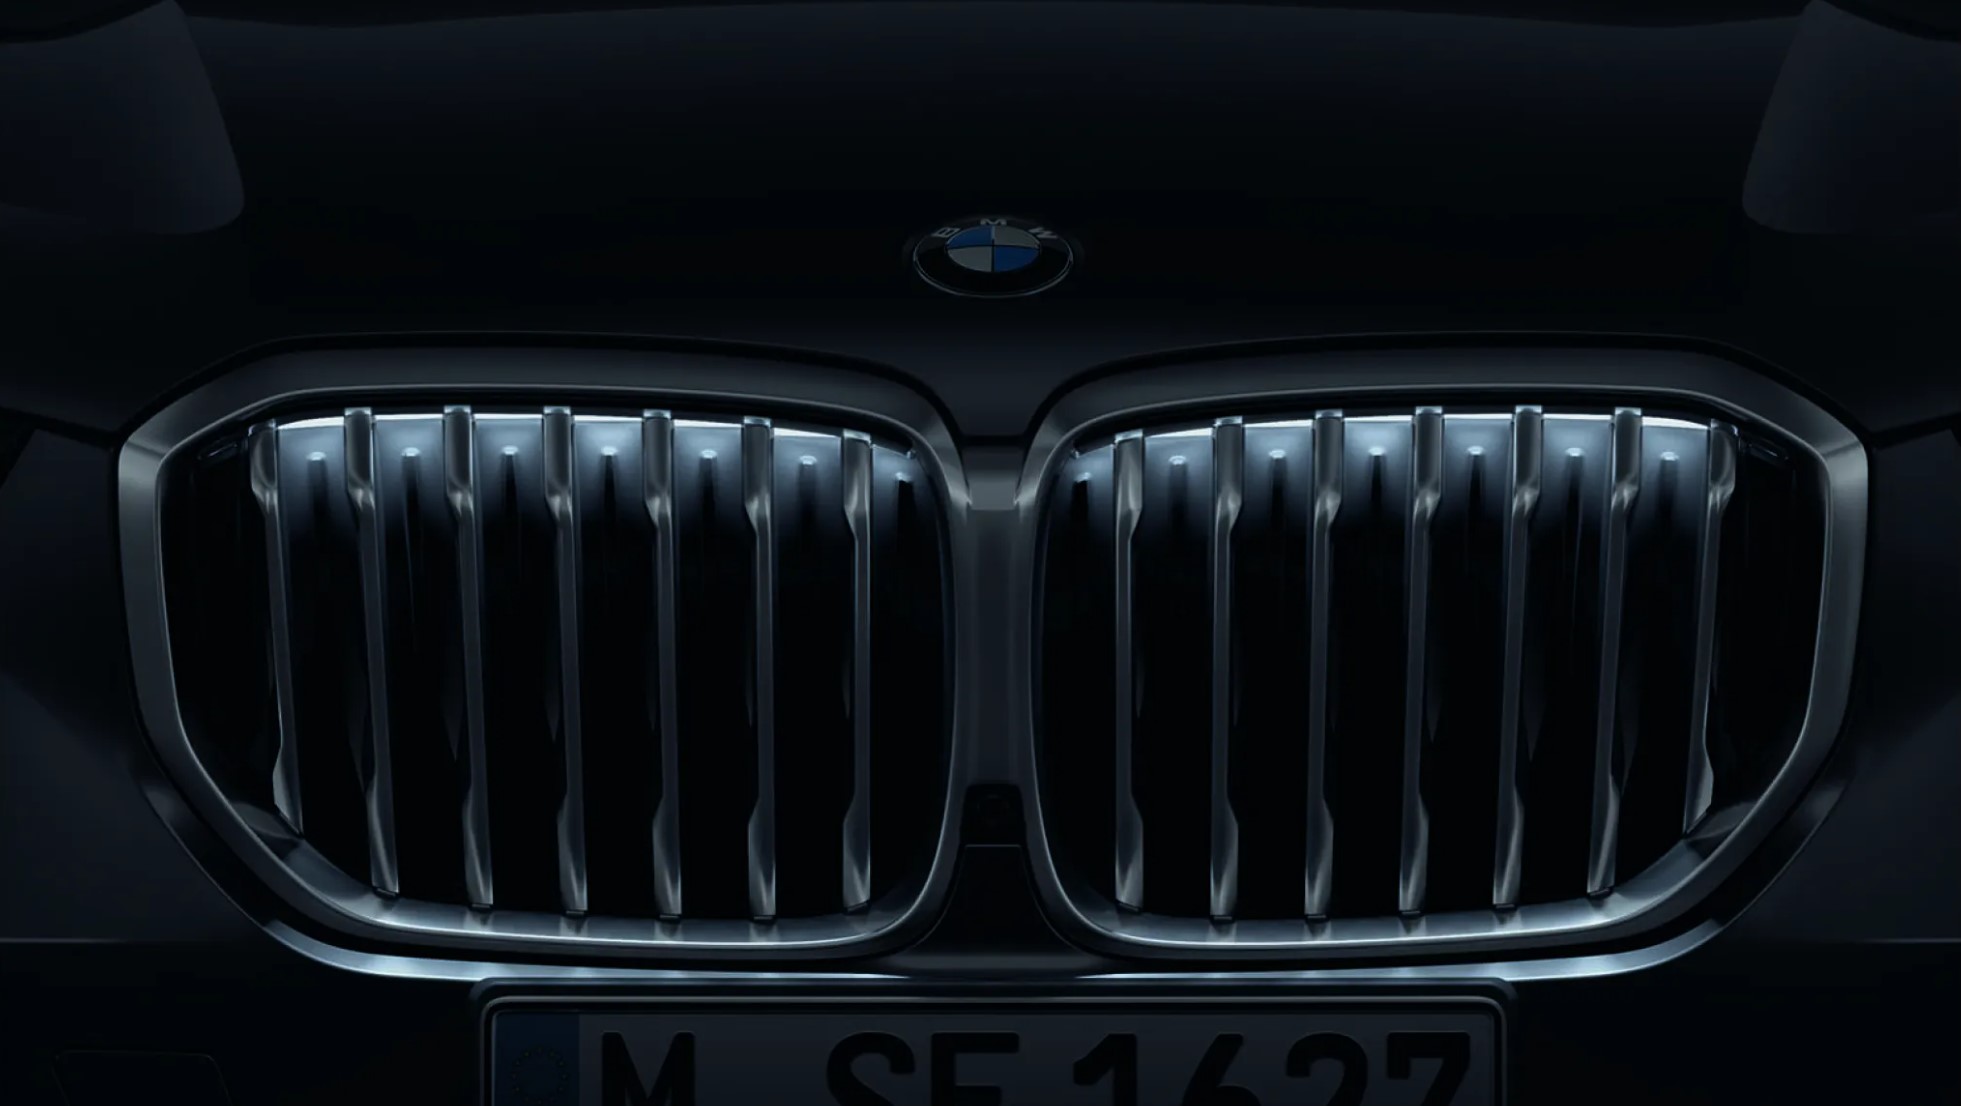 Calandre illuminée 'BMW Iconic Glow'